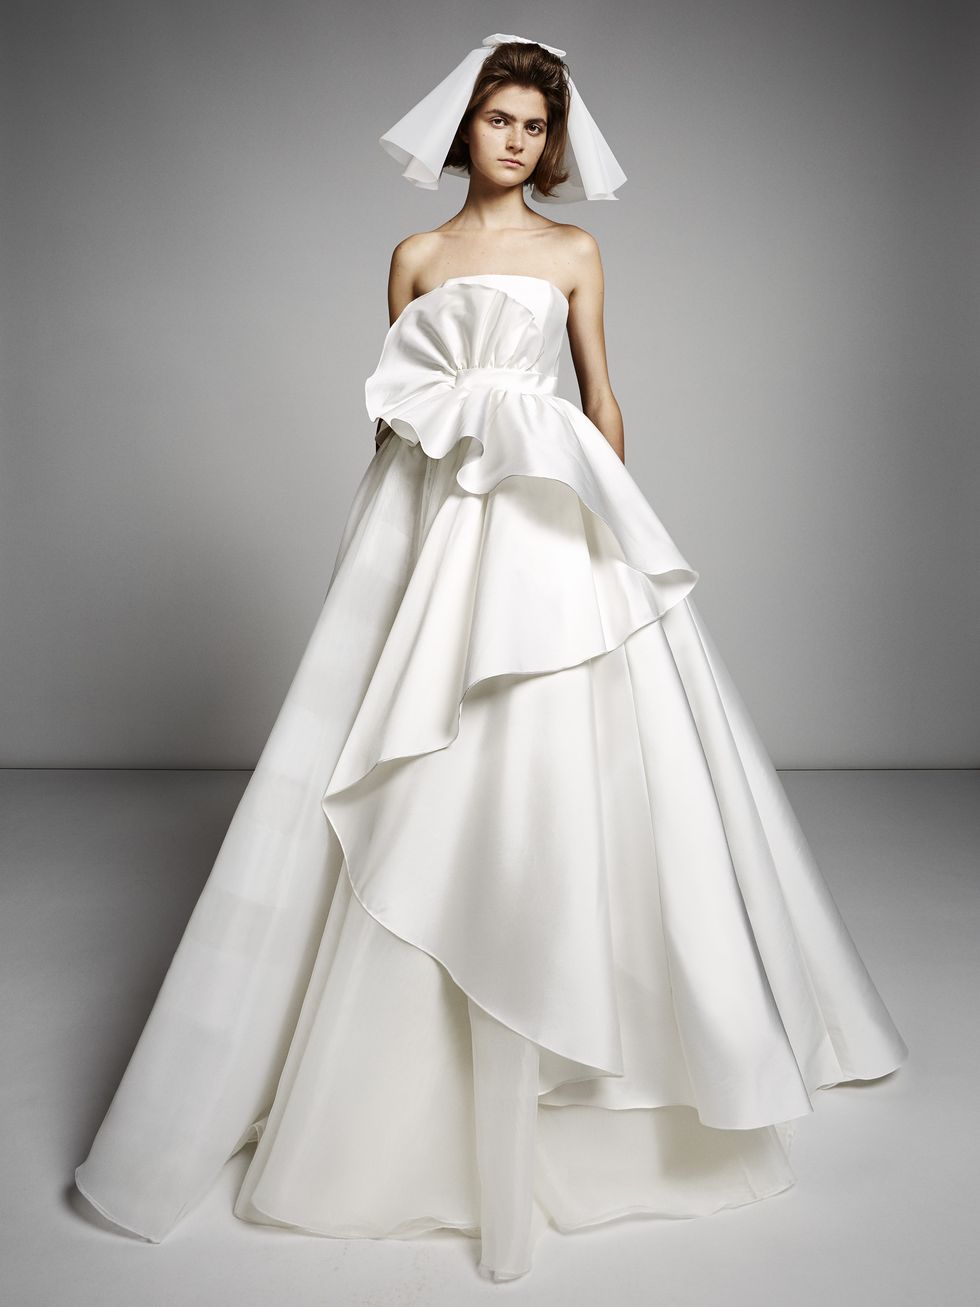 Gown, Wedding dress, Fashion model, Clothing, Dress, Bridal clothing, Bridal party dress, Bridal accessory, Shoulder, A-line, 